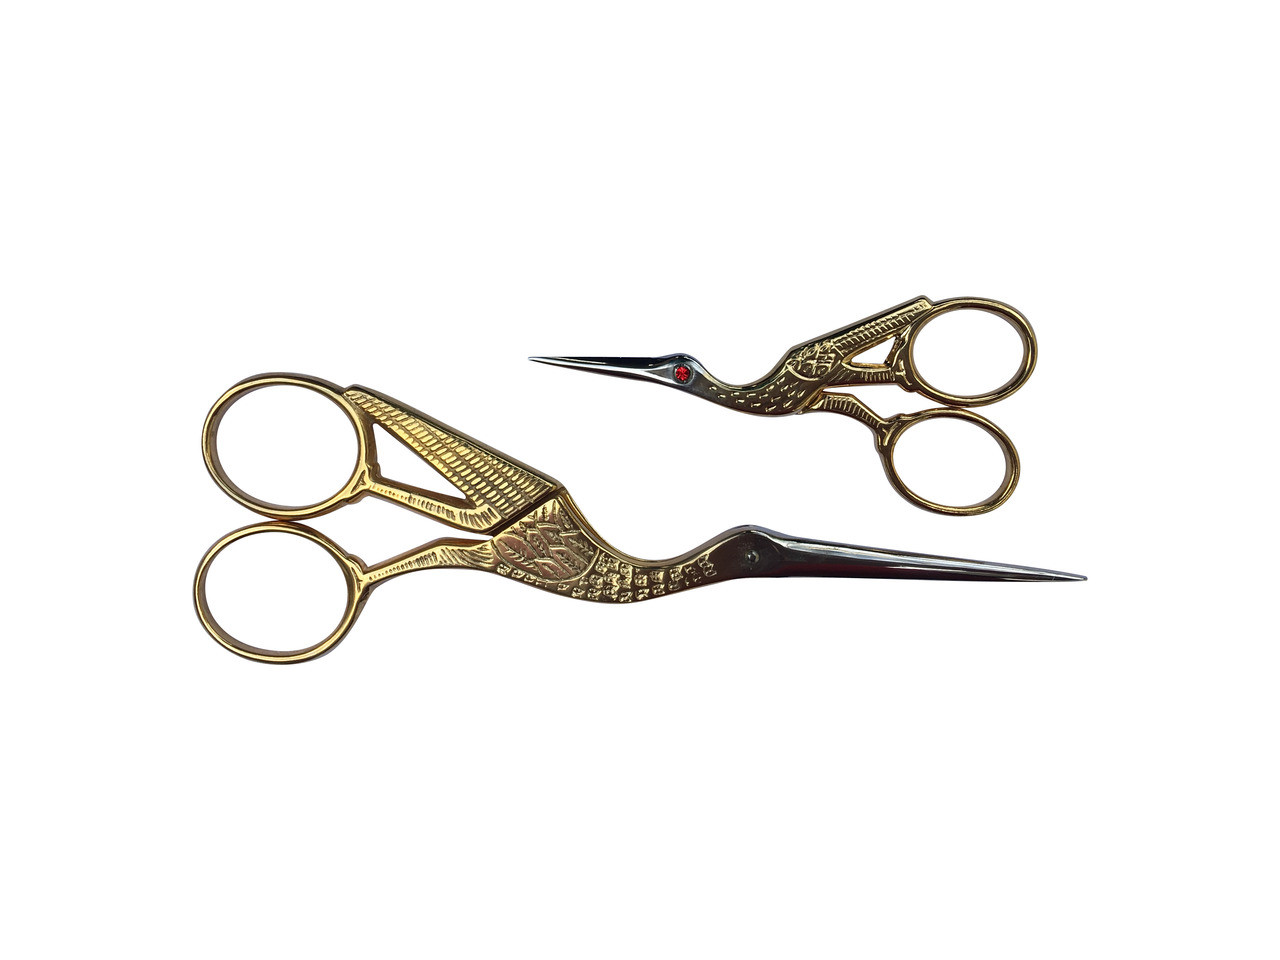 Decorative Travel 3.5 inch Stork Scissors - Super Sharp Scissors